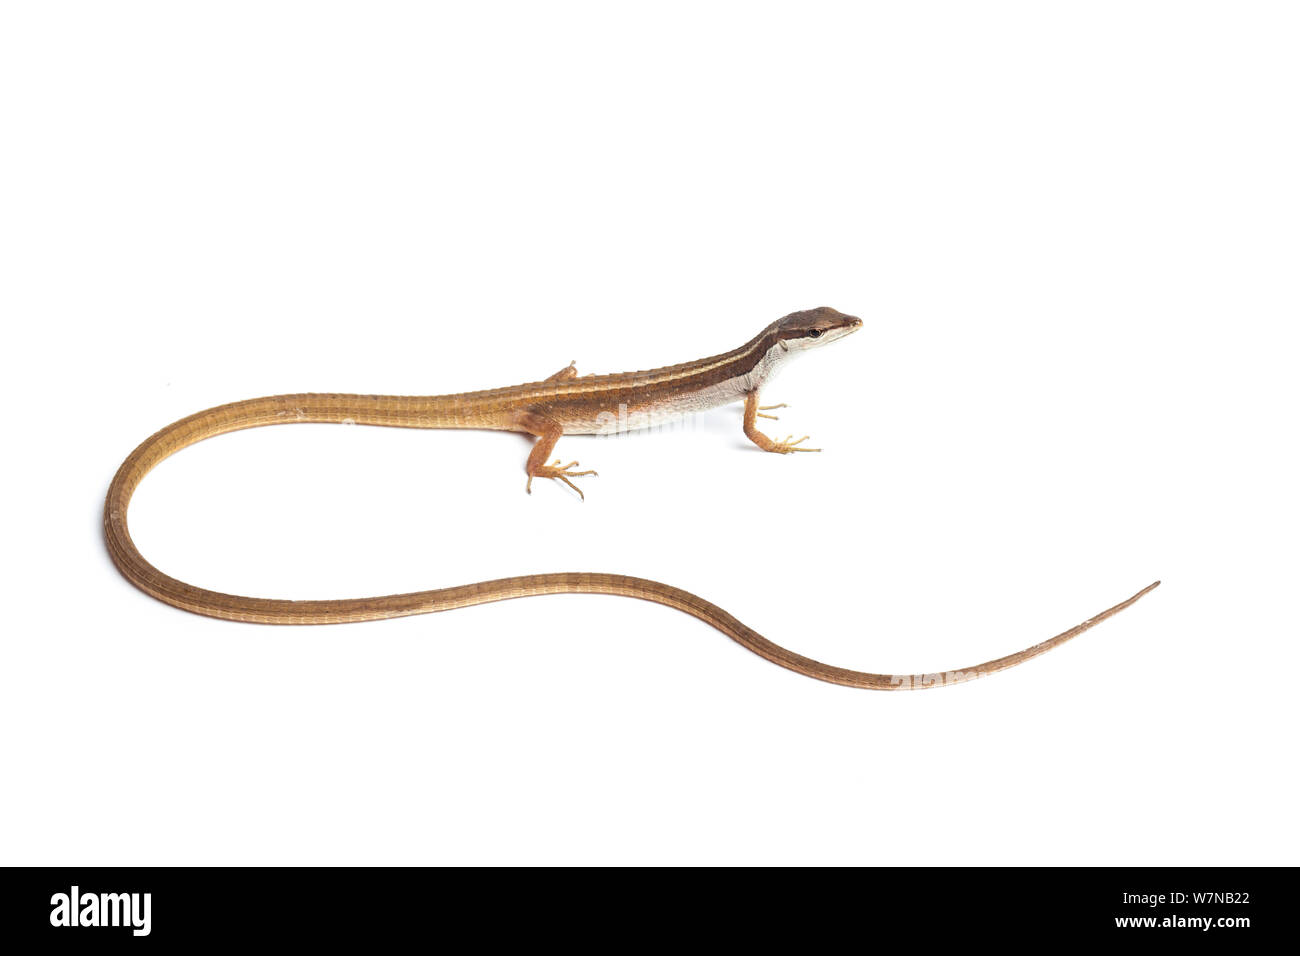 Seis-rayado largo-tailed lizard (Takydromus sexlineatus), cautiva, ocurre el Sudeste Asiático Foto de stock